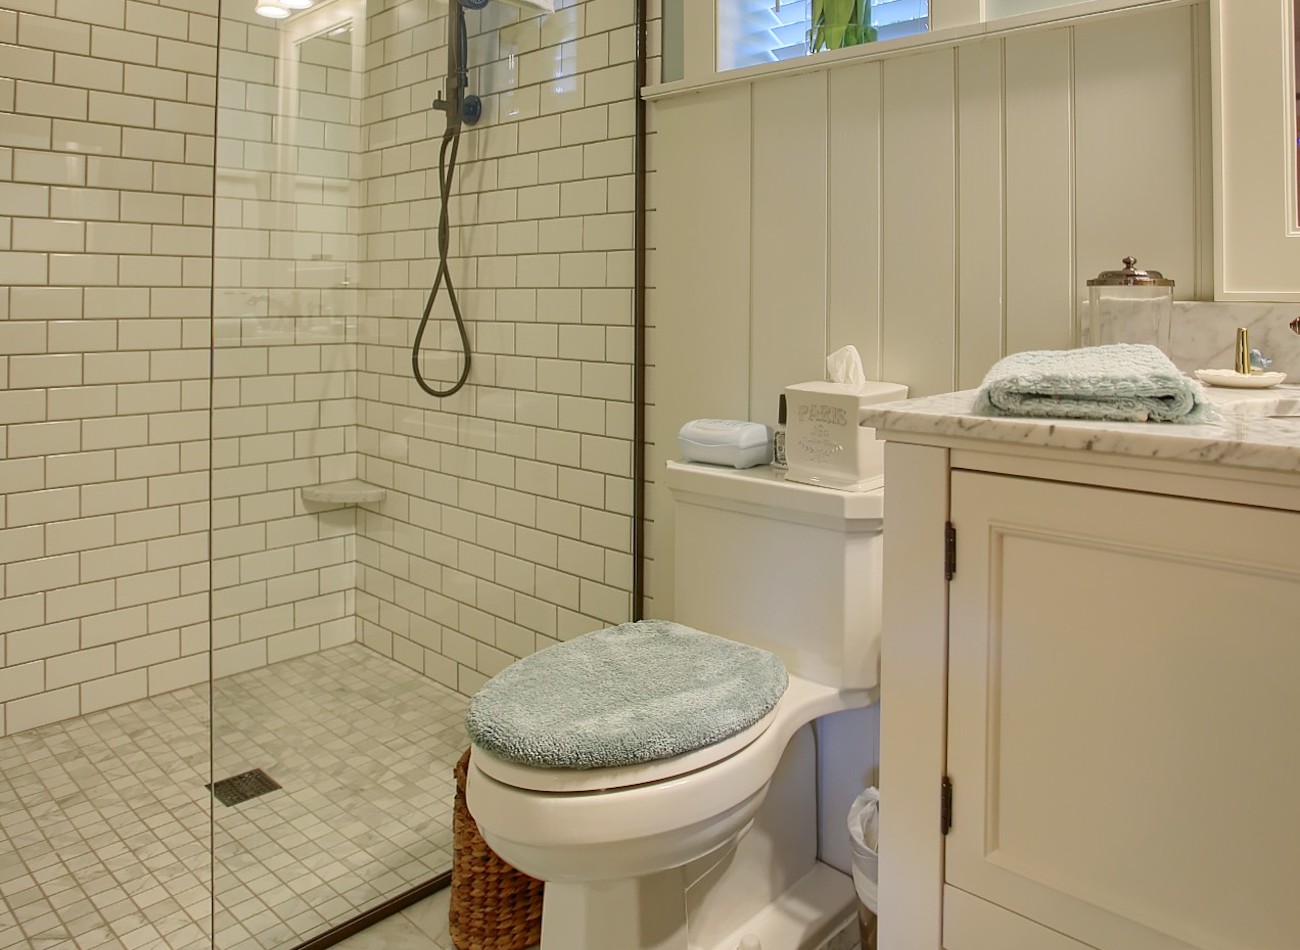 Full bathroom with glass door shower in an olde bulltown home